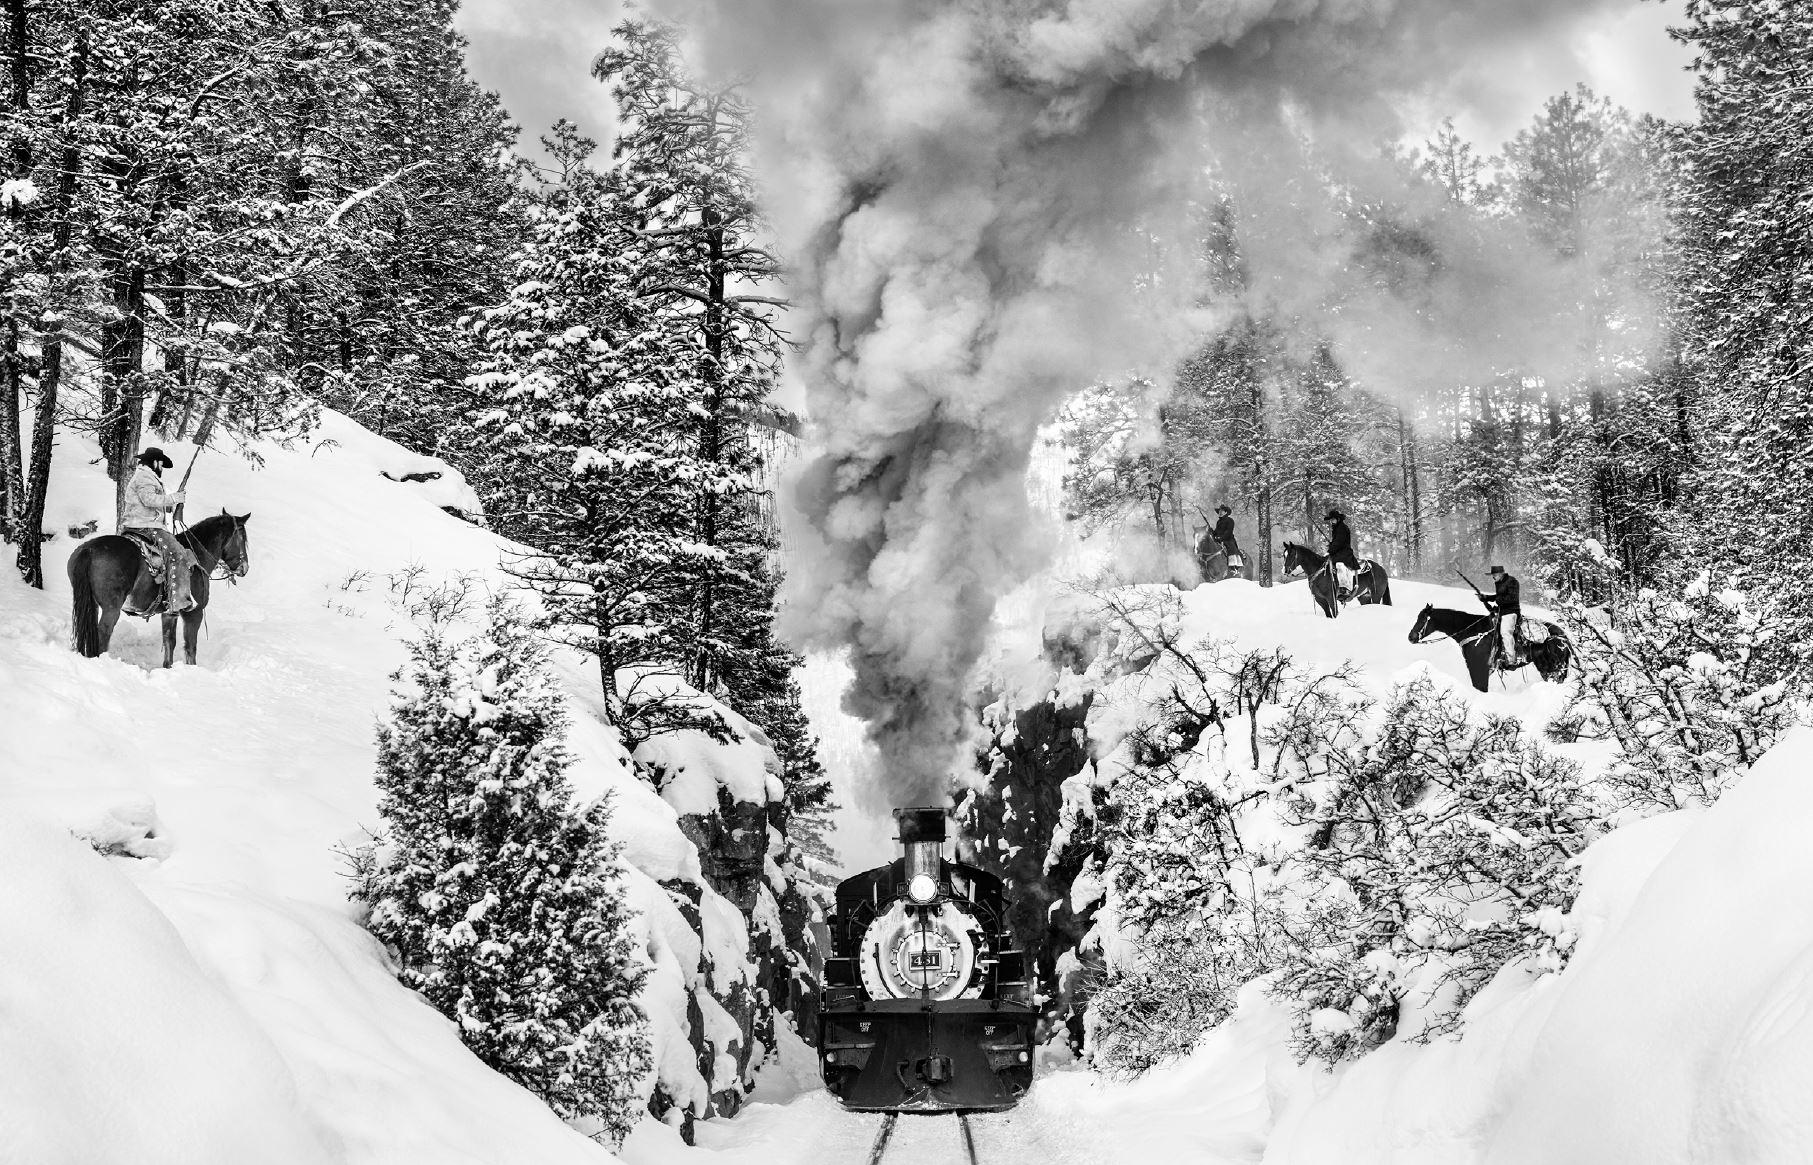 David Yarrow Figurative Photograph - 'Outlaws' - Cowboys ambushing historic train in snow, fine art photography, 2024